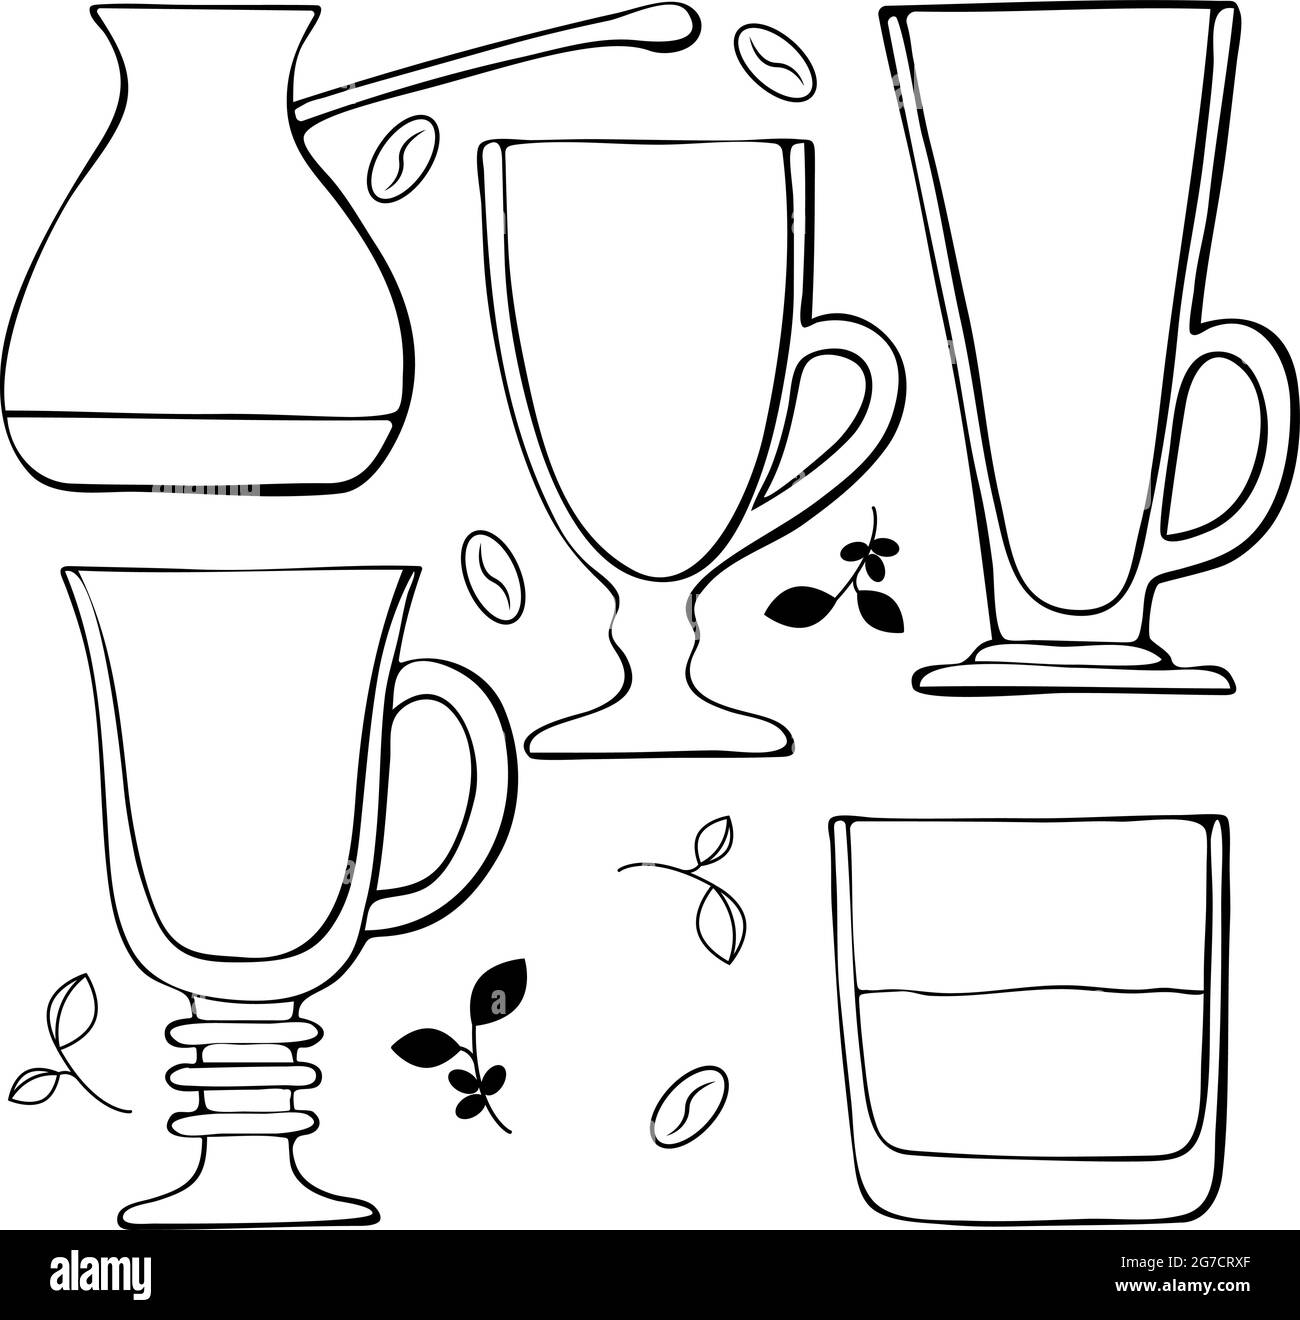 Un set di bicchieri per bevande al caffè e un bicchiere di whisky, latte, caffè irlandese, caffè turco, fagioli e ciuffi di caffè. Illustrazione vettoriale Illustrazione Vettoriale